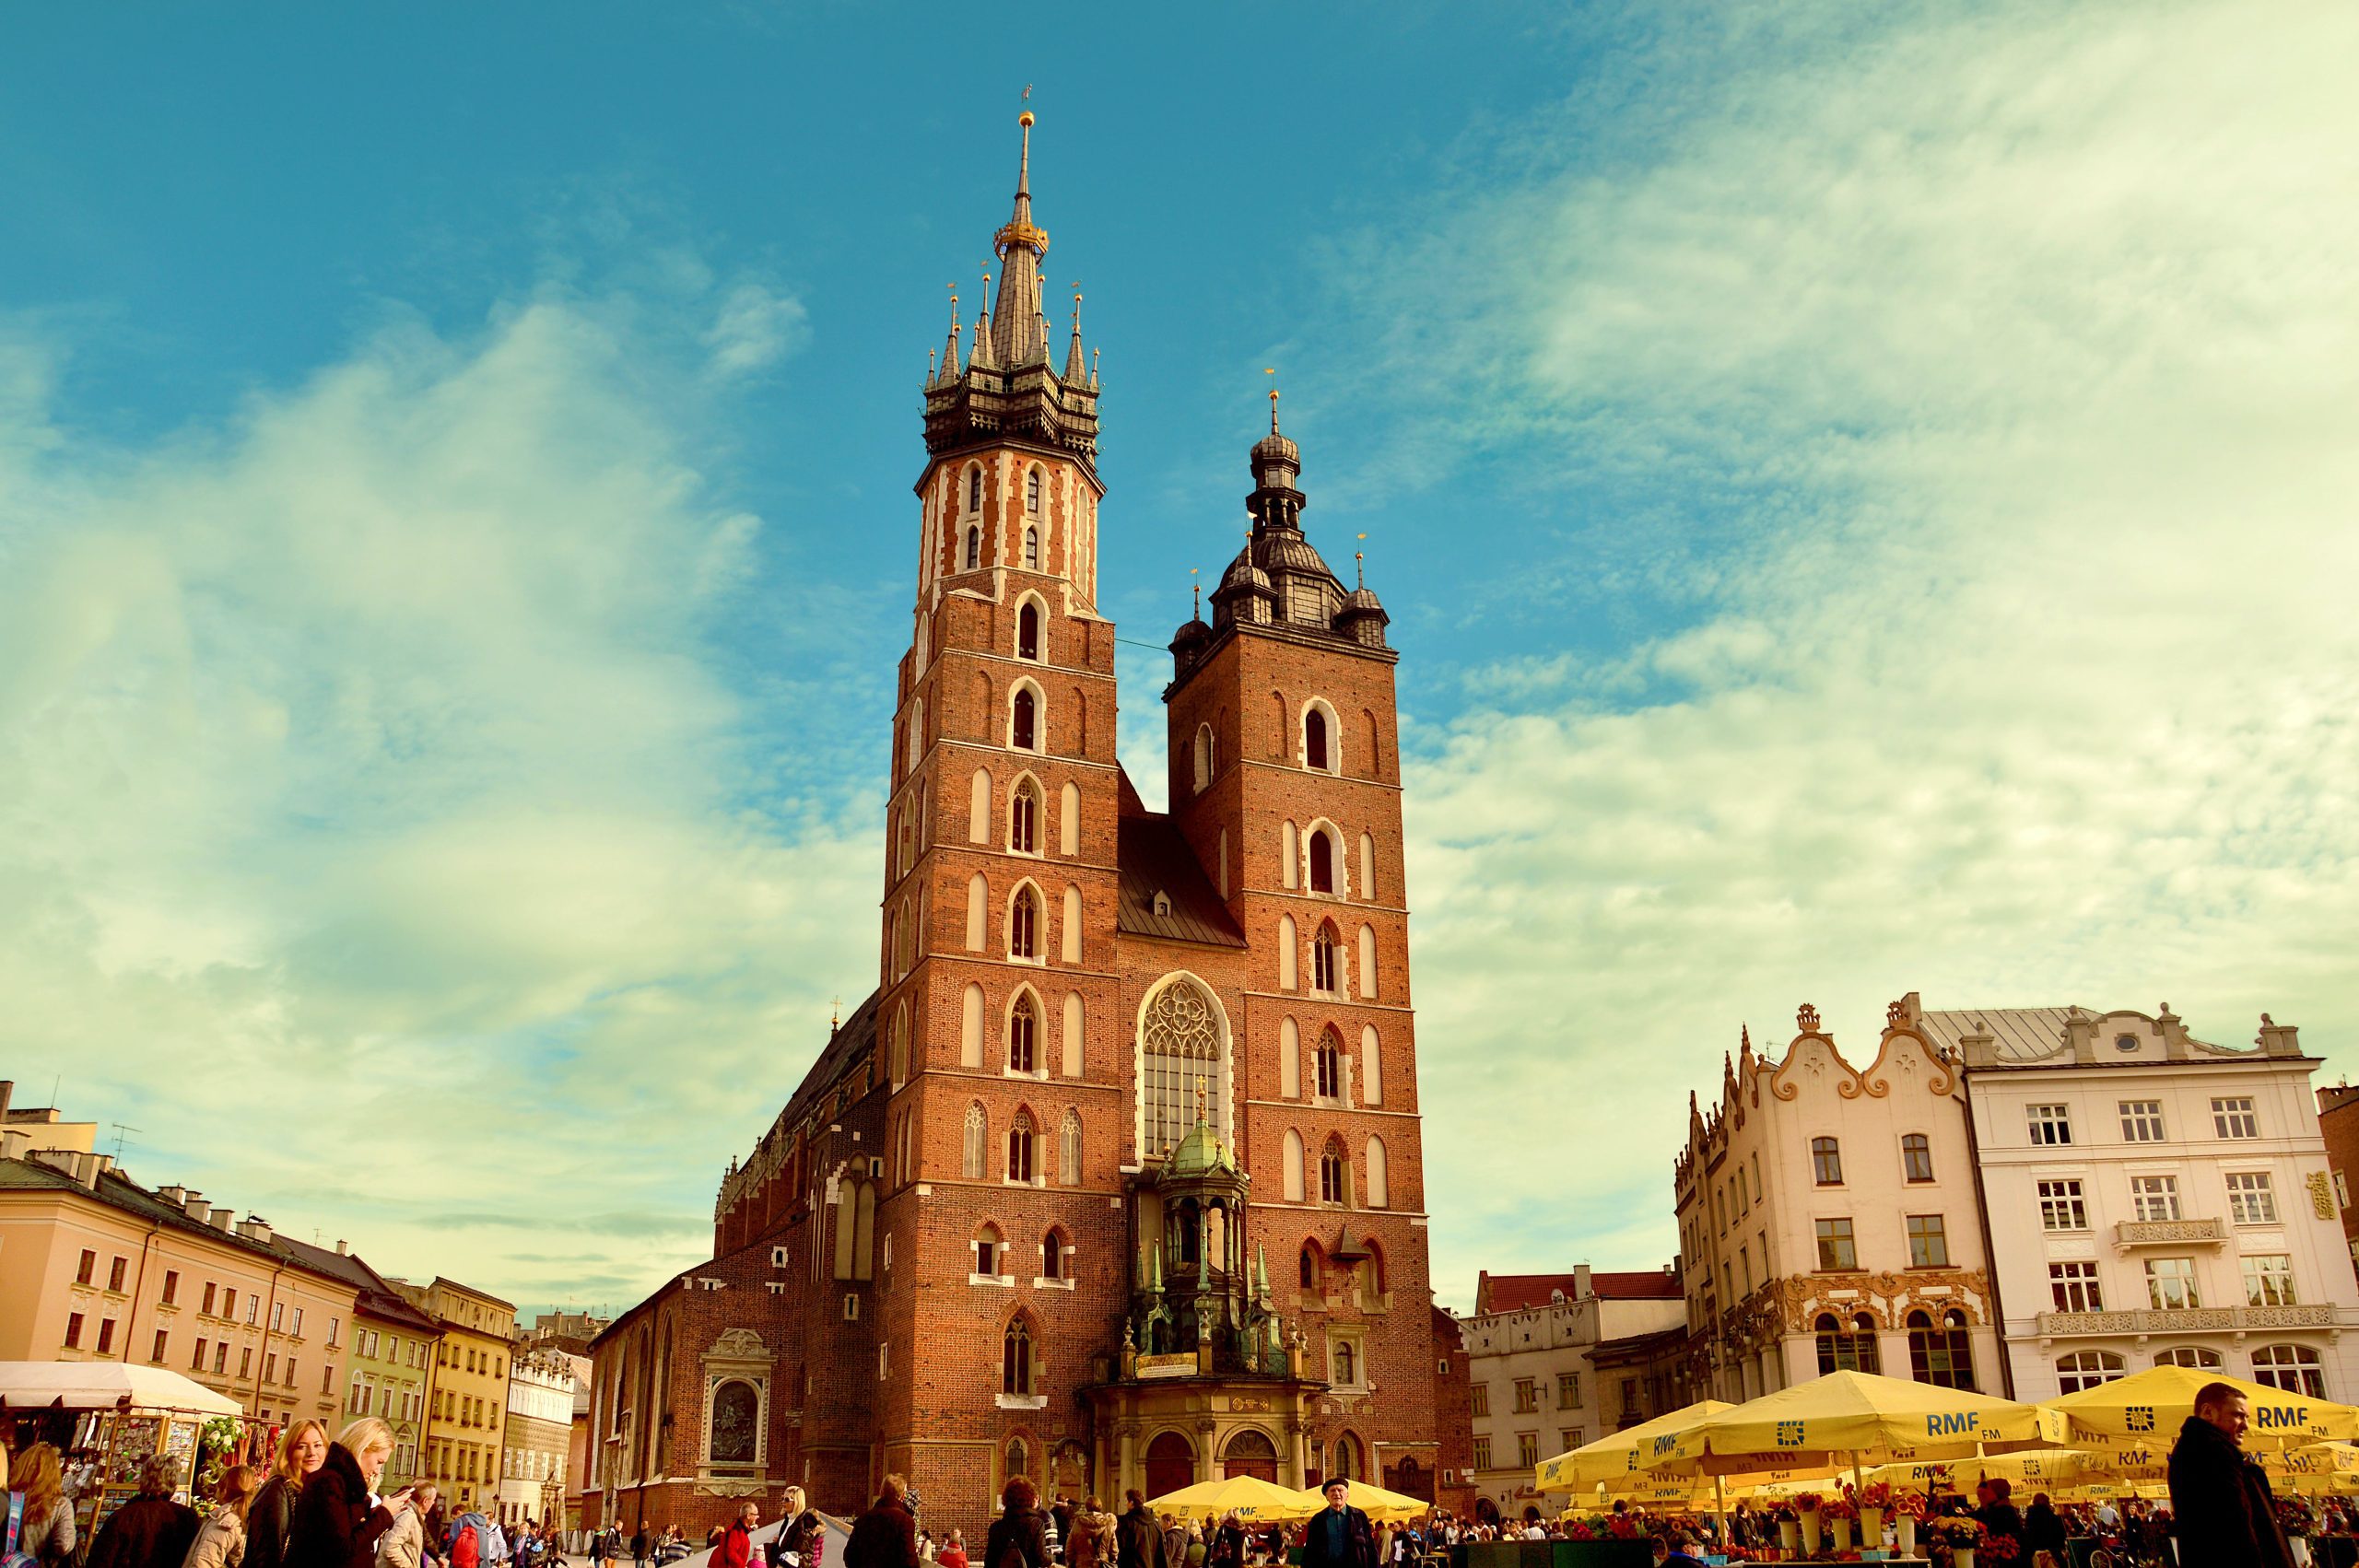 Old Town of Krakow